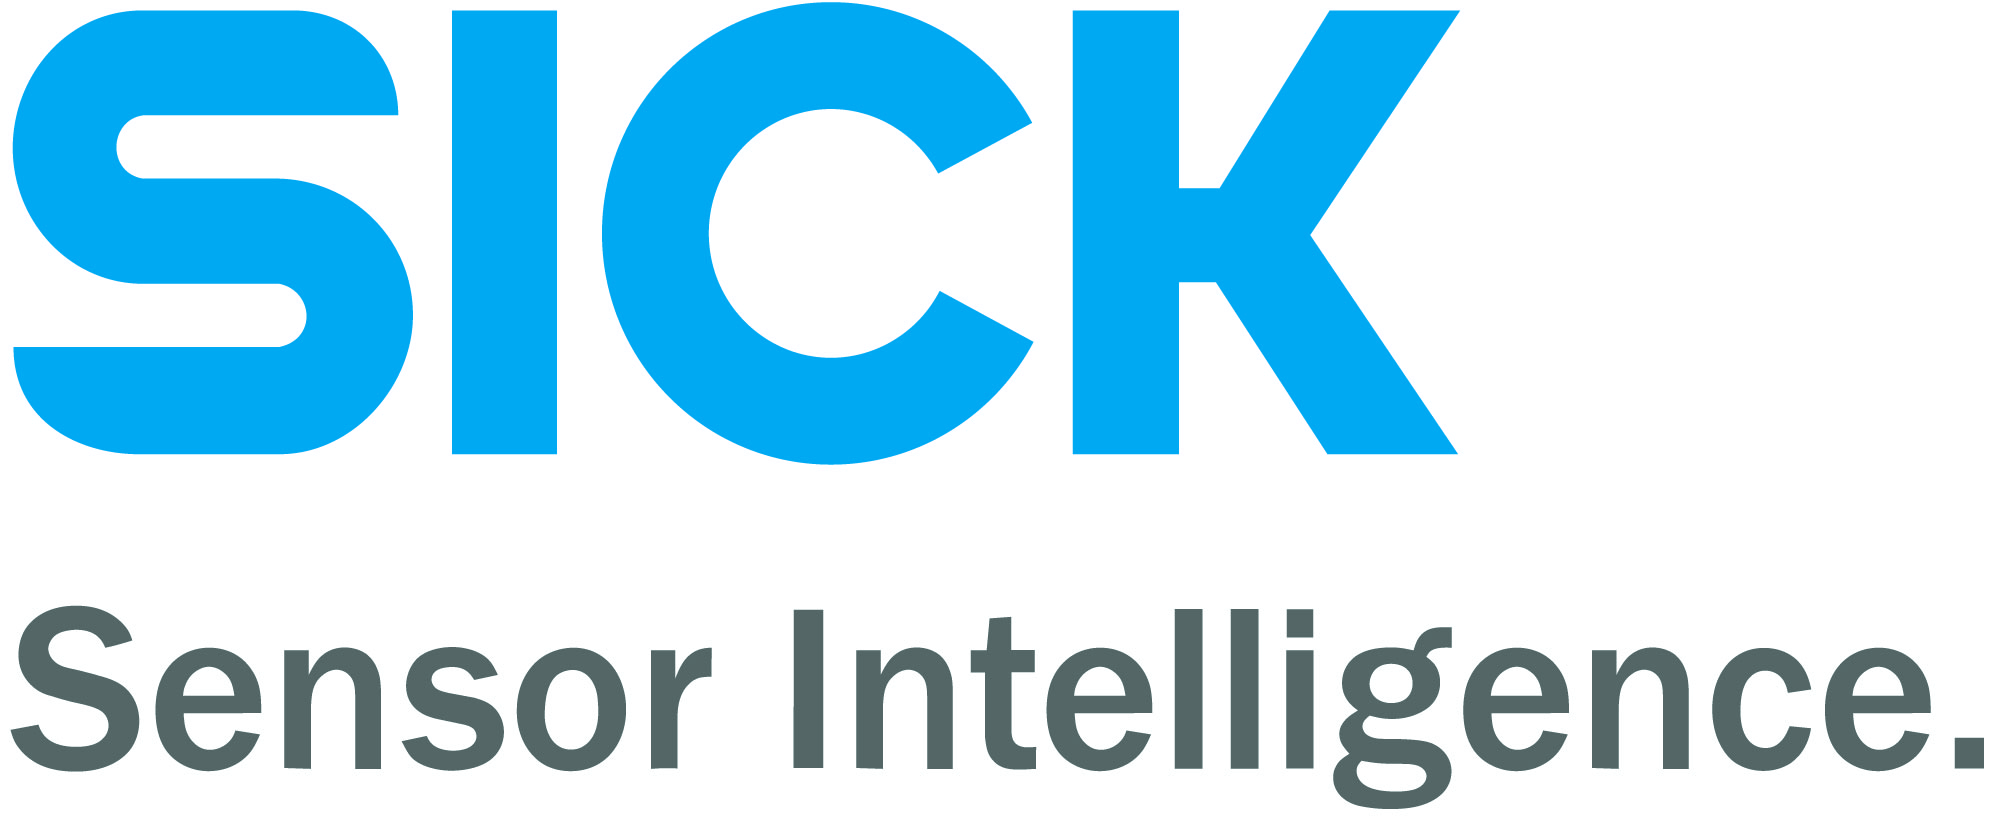 Sick Sensor Intelligence logo